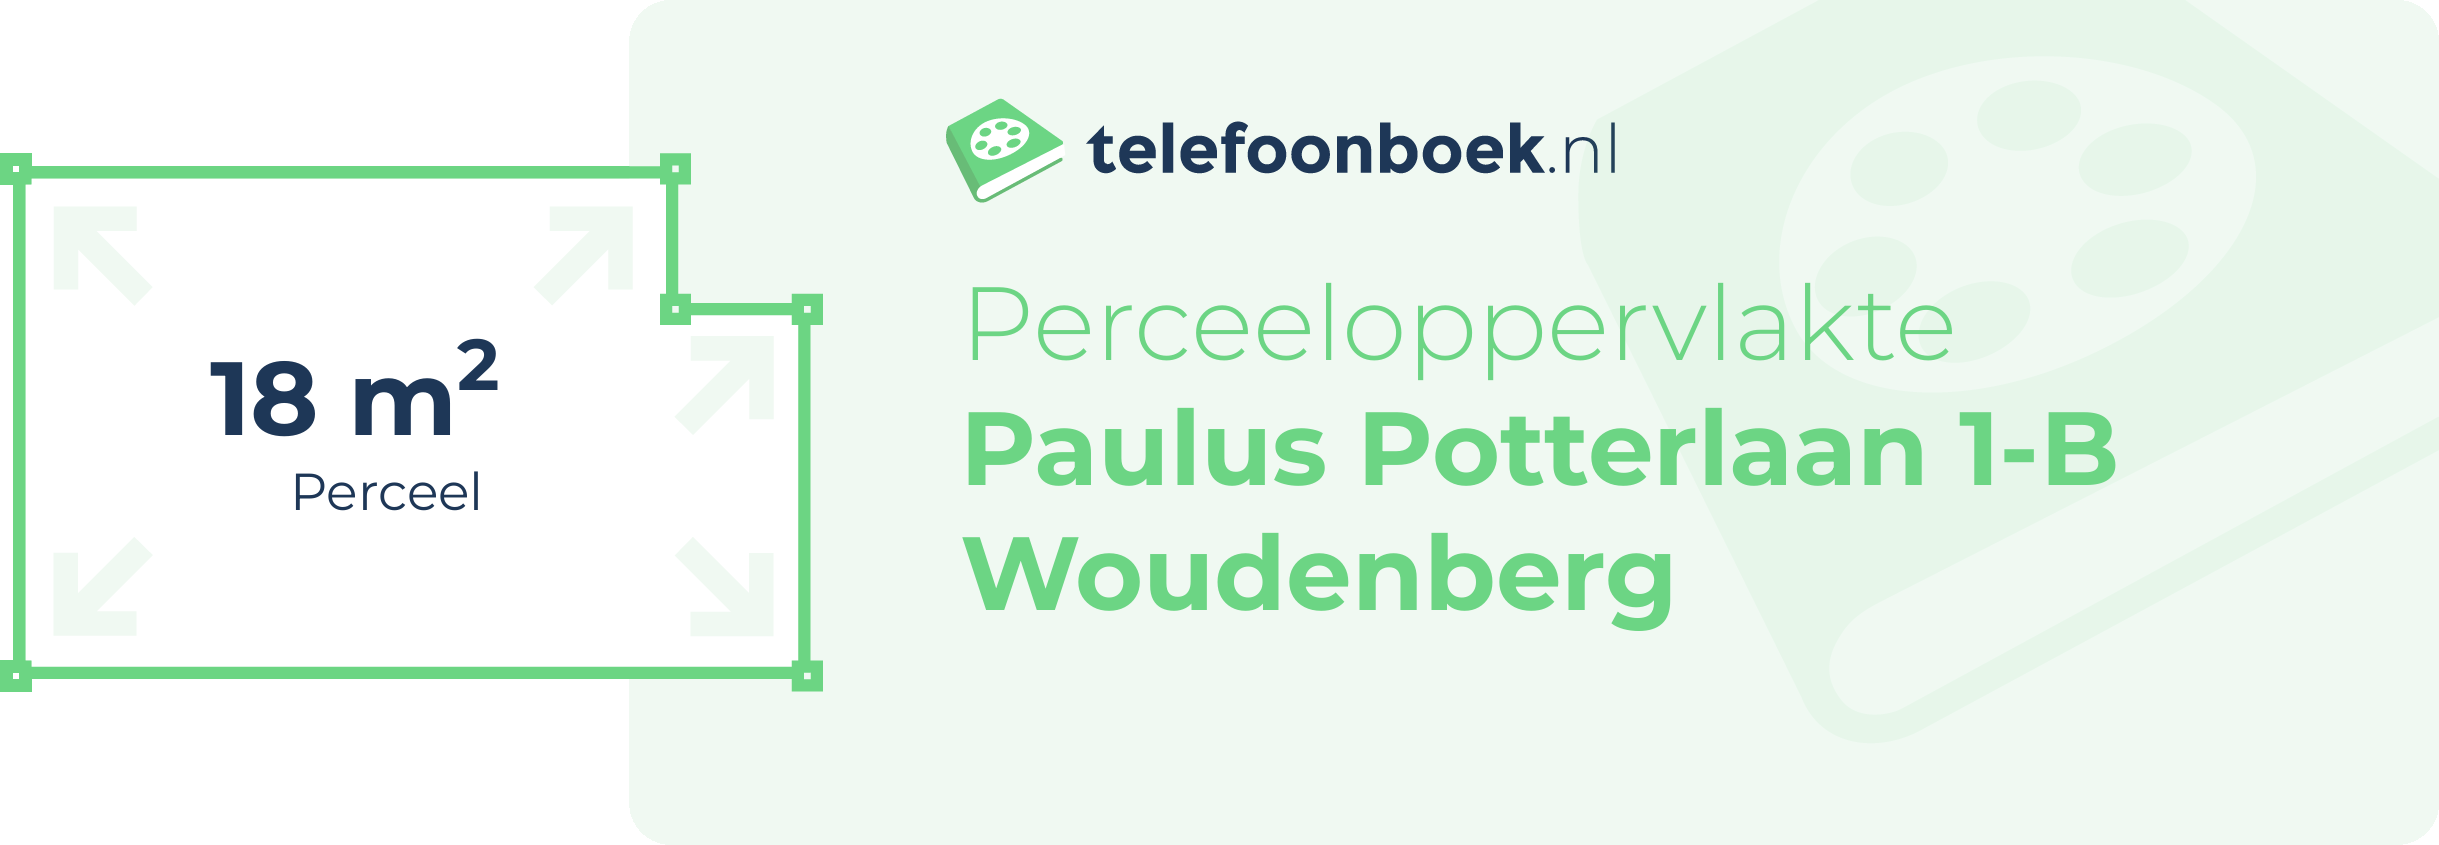 Perceeloppervlakte Paulus Potterlaan 1-B Woudenberg